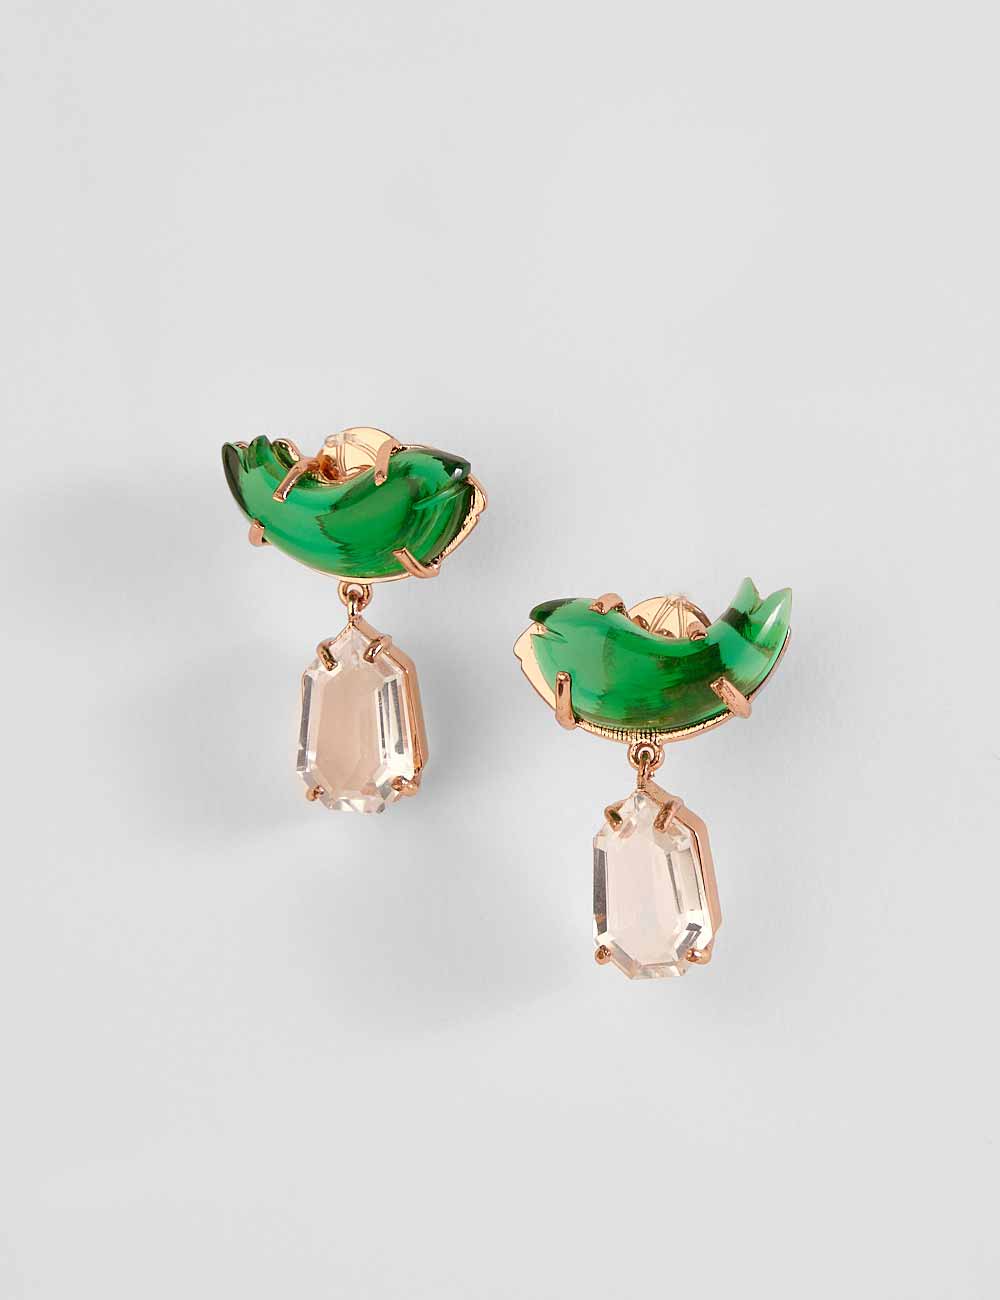 Le Cleo drop Earrings in jade green